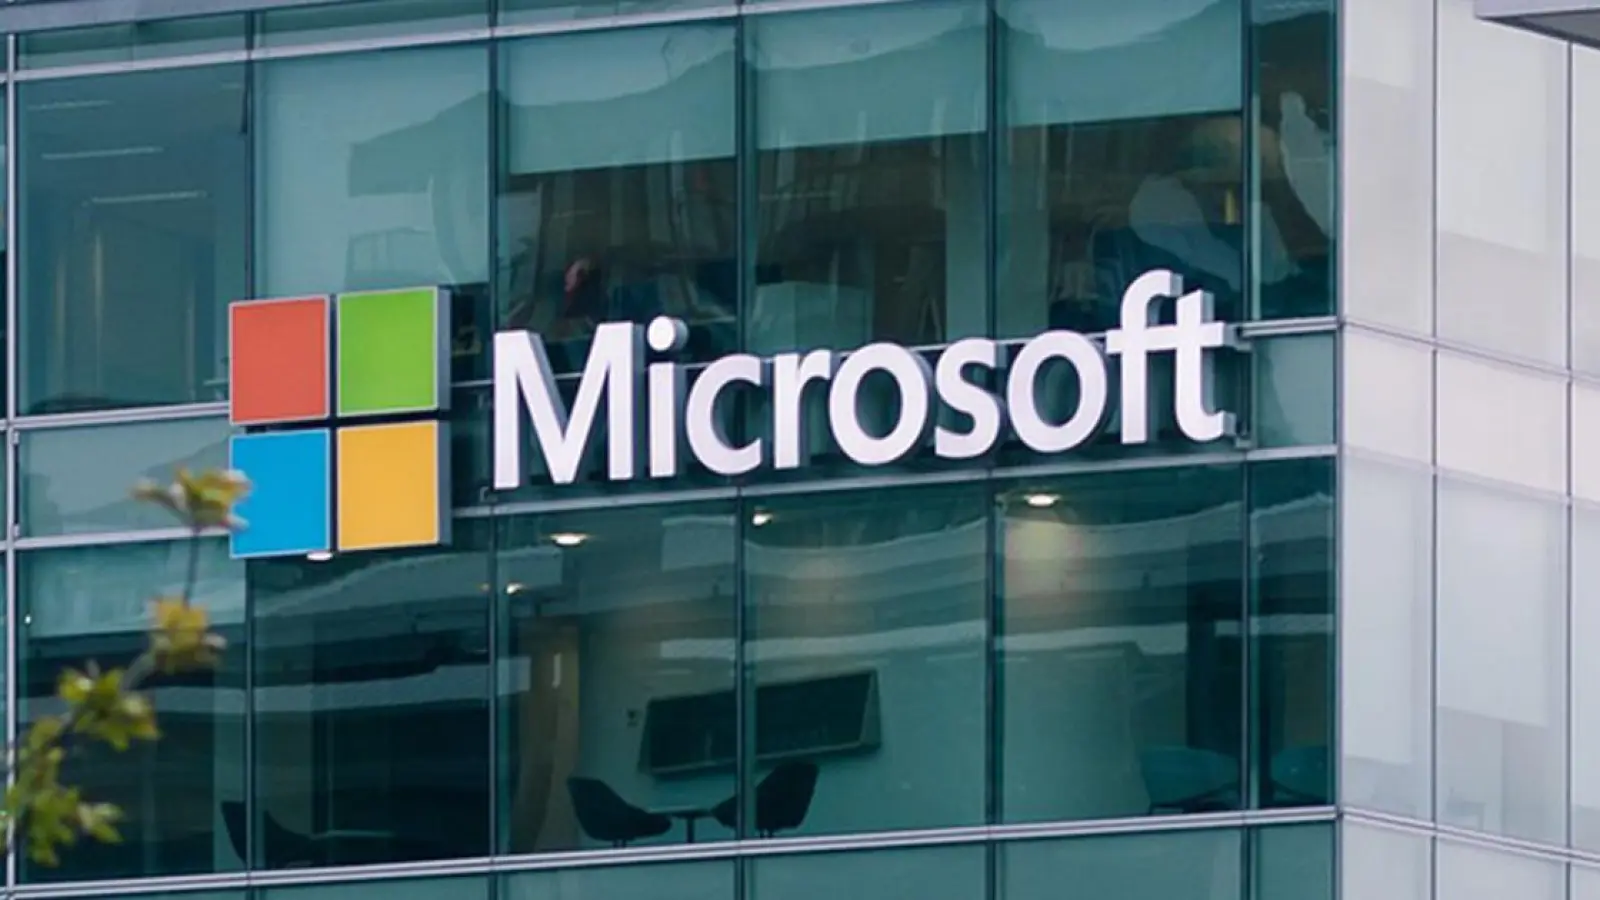 Microsoft: Probleme bei Programmen wie Outlook und Teams am 25. Januar 2023. (Foto: pixabay/ClearCutLtd)